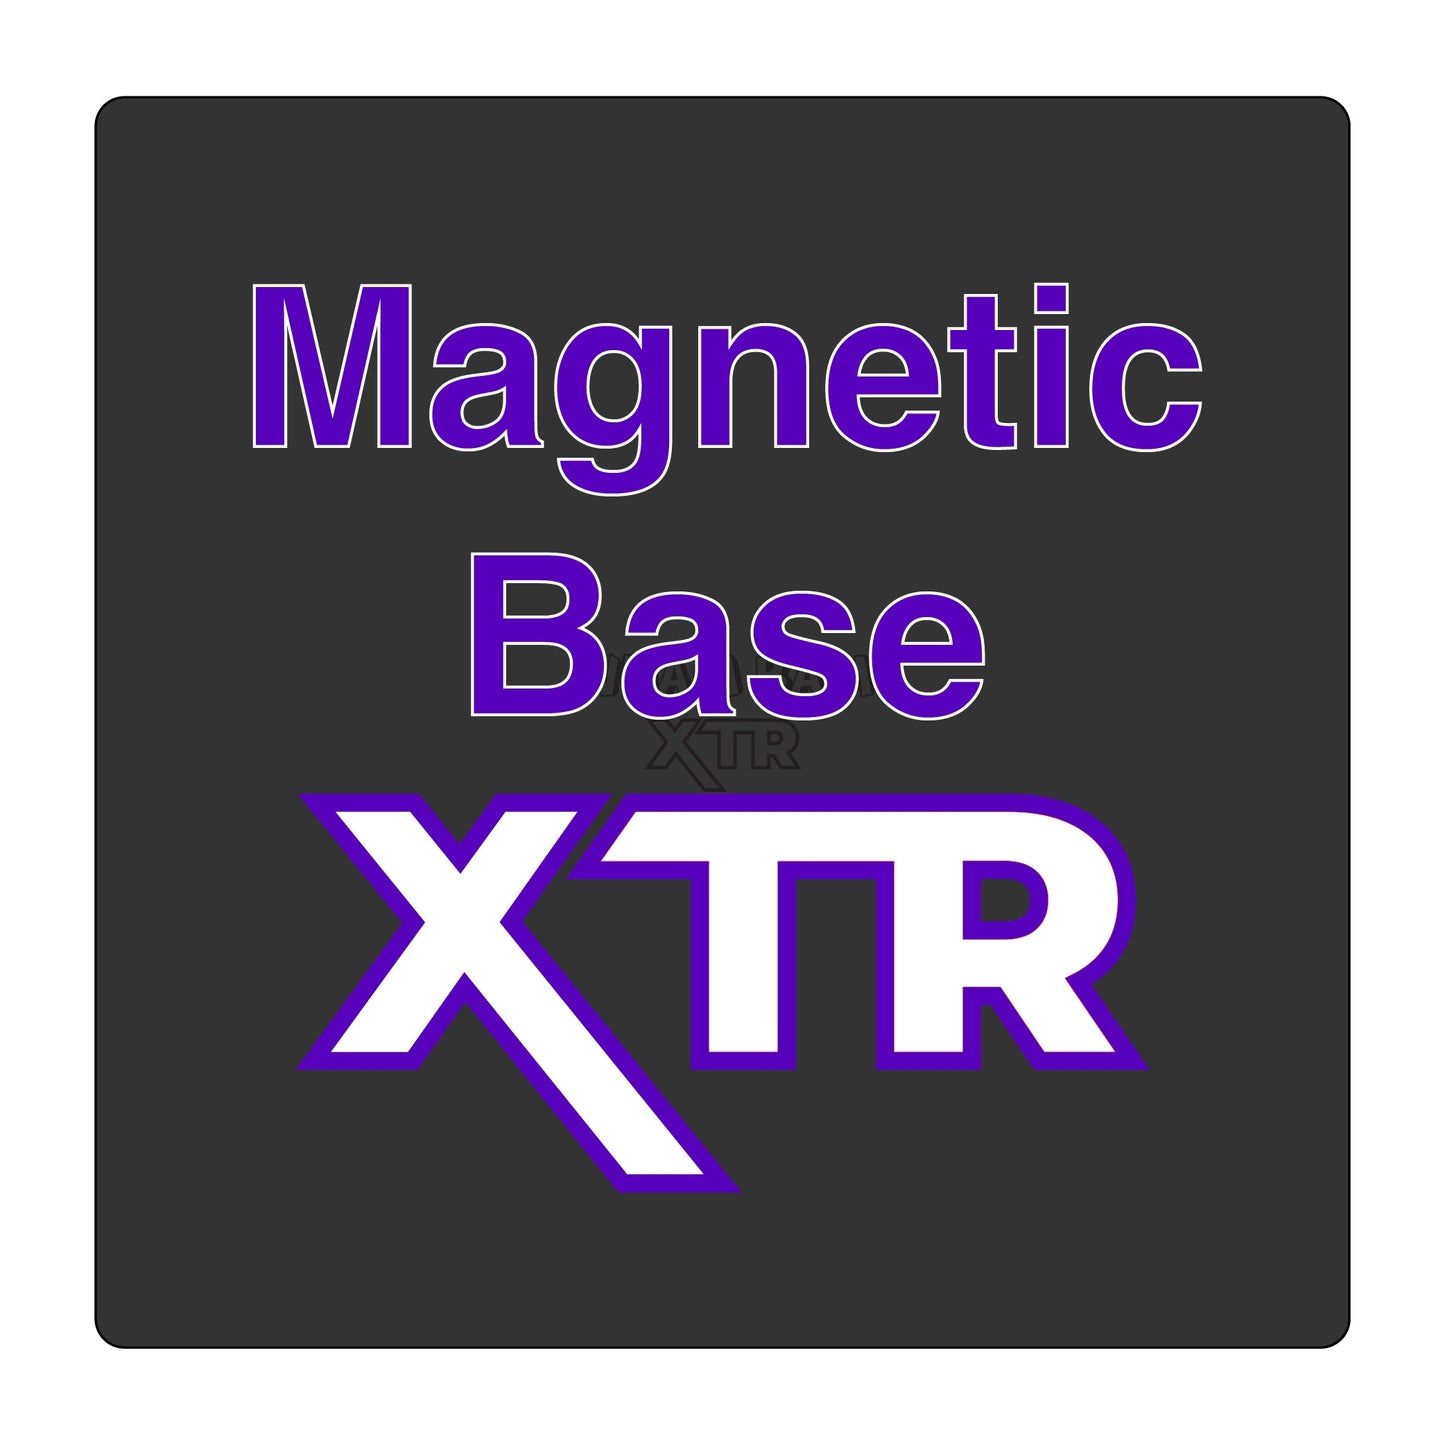 XTR FDM Magnetic Sheet - 305 x 305 - Voron 2.4 300 and Voron Trident 300